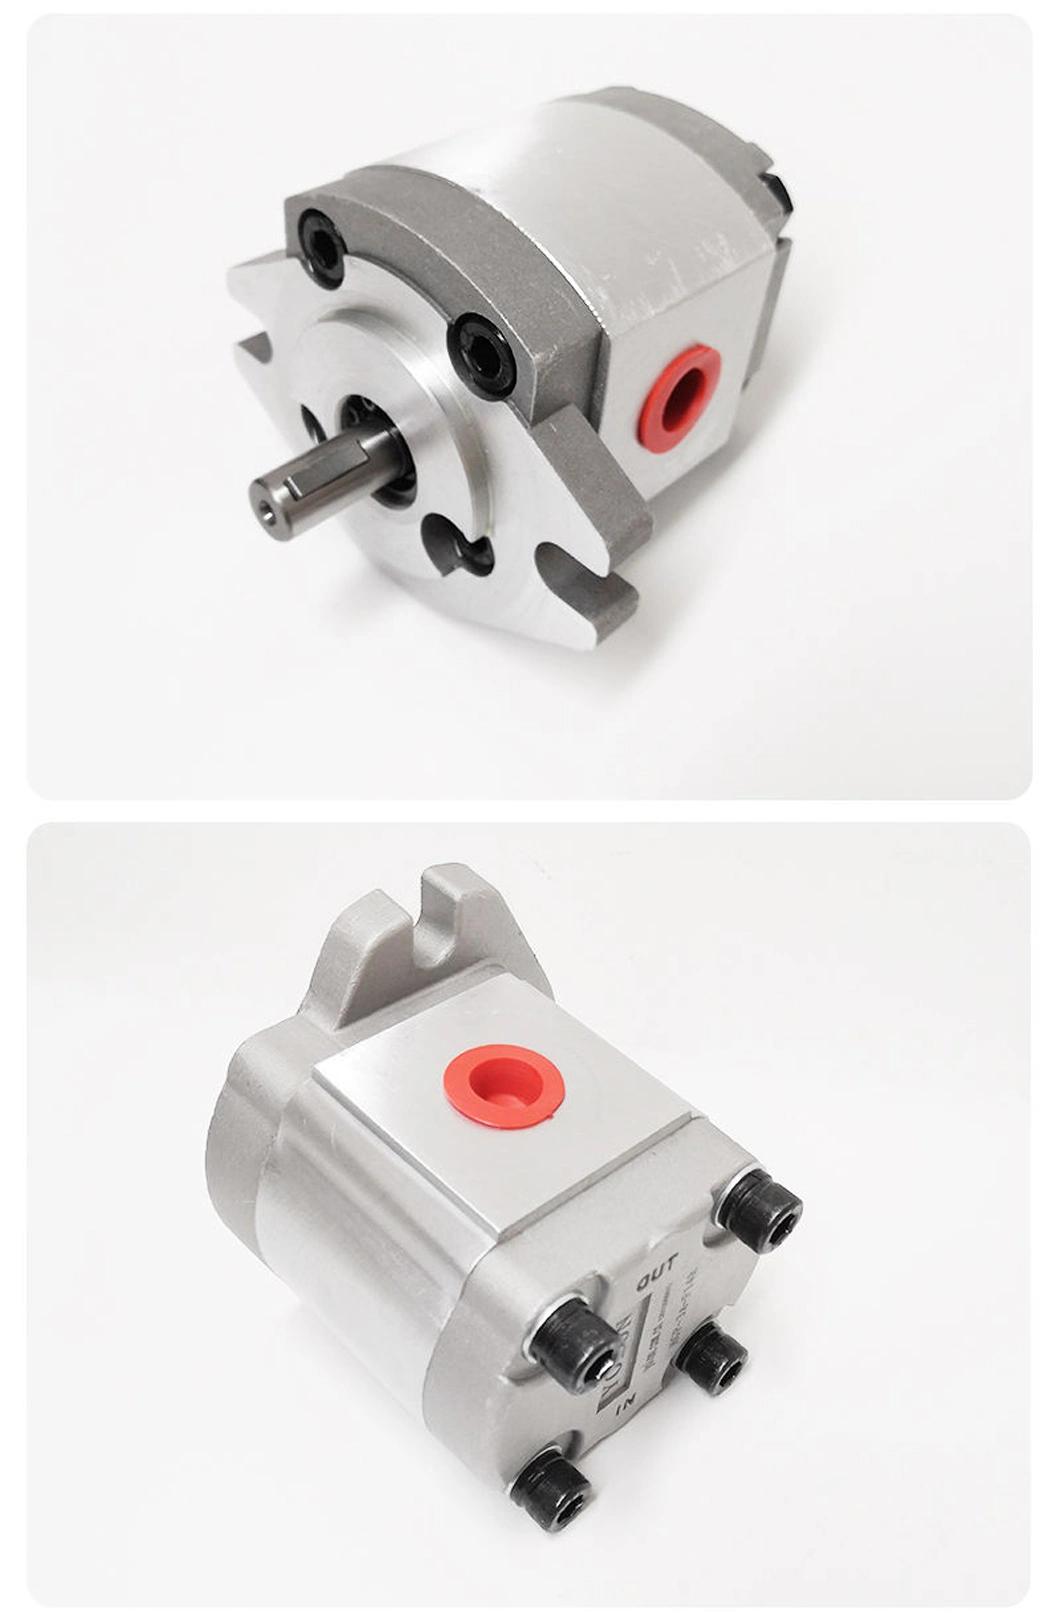 Hydraulic Gear Pump Hgp Series 21MPa Rotary Oil Gear Pump